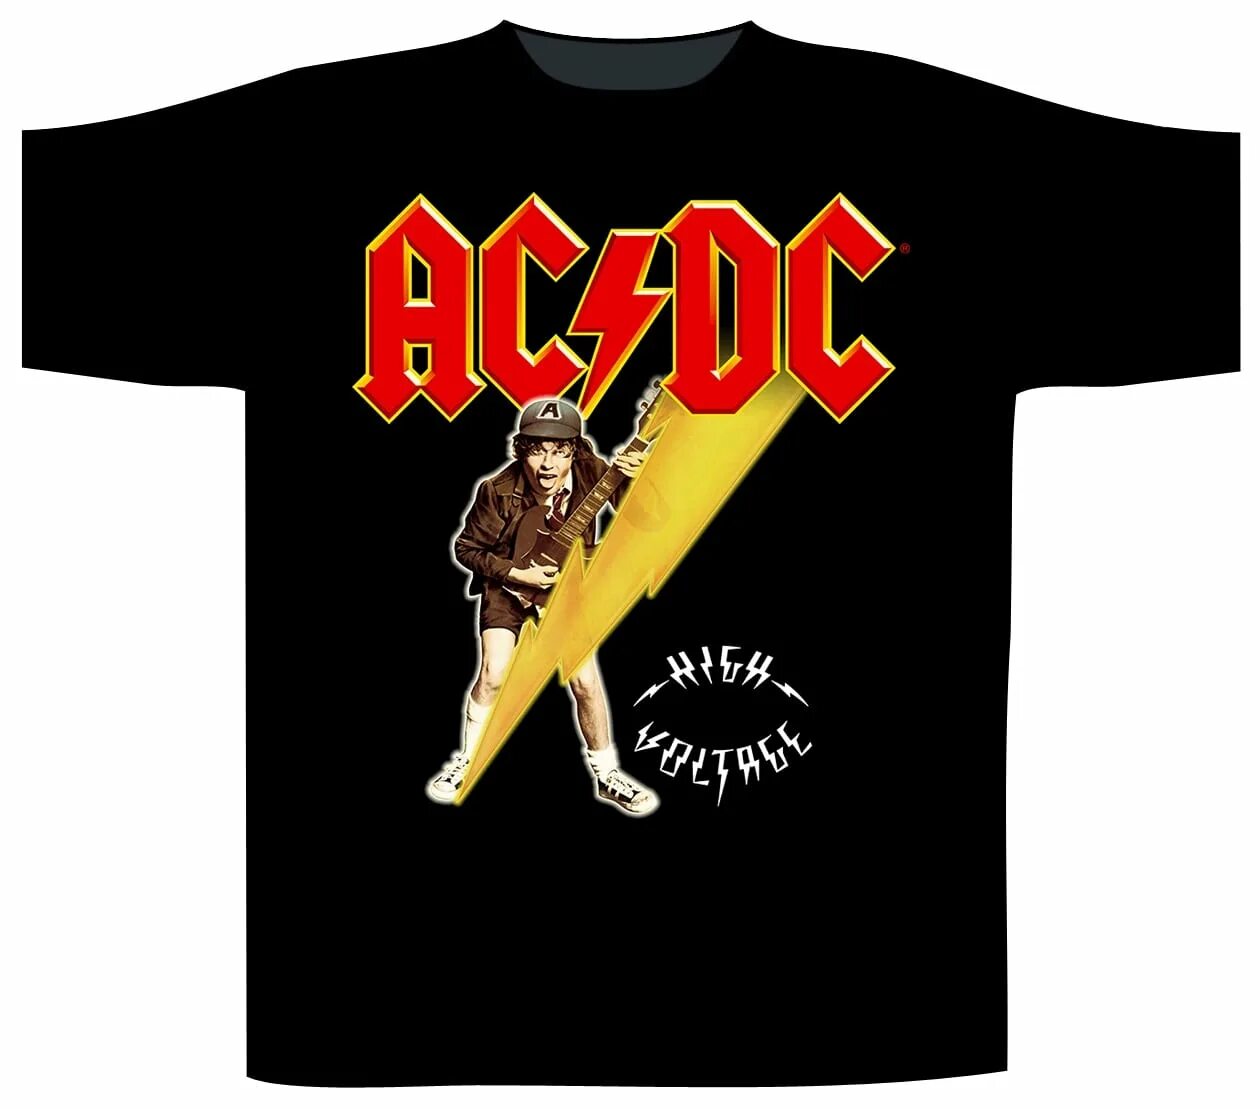 Ac dc high. AC DC футболка Angus young. Футболка ACDC Voltage. АС ДС фото. AC DC High Voltage t-Shirt.